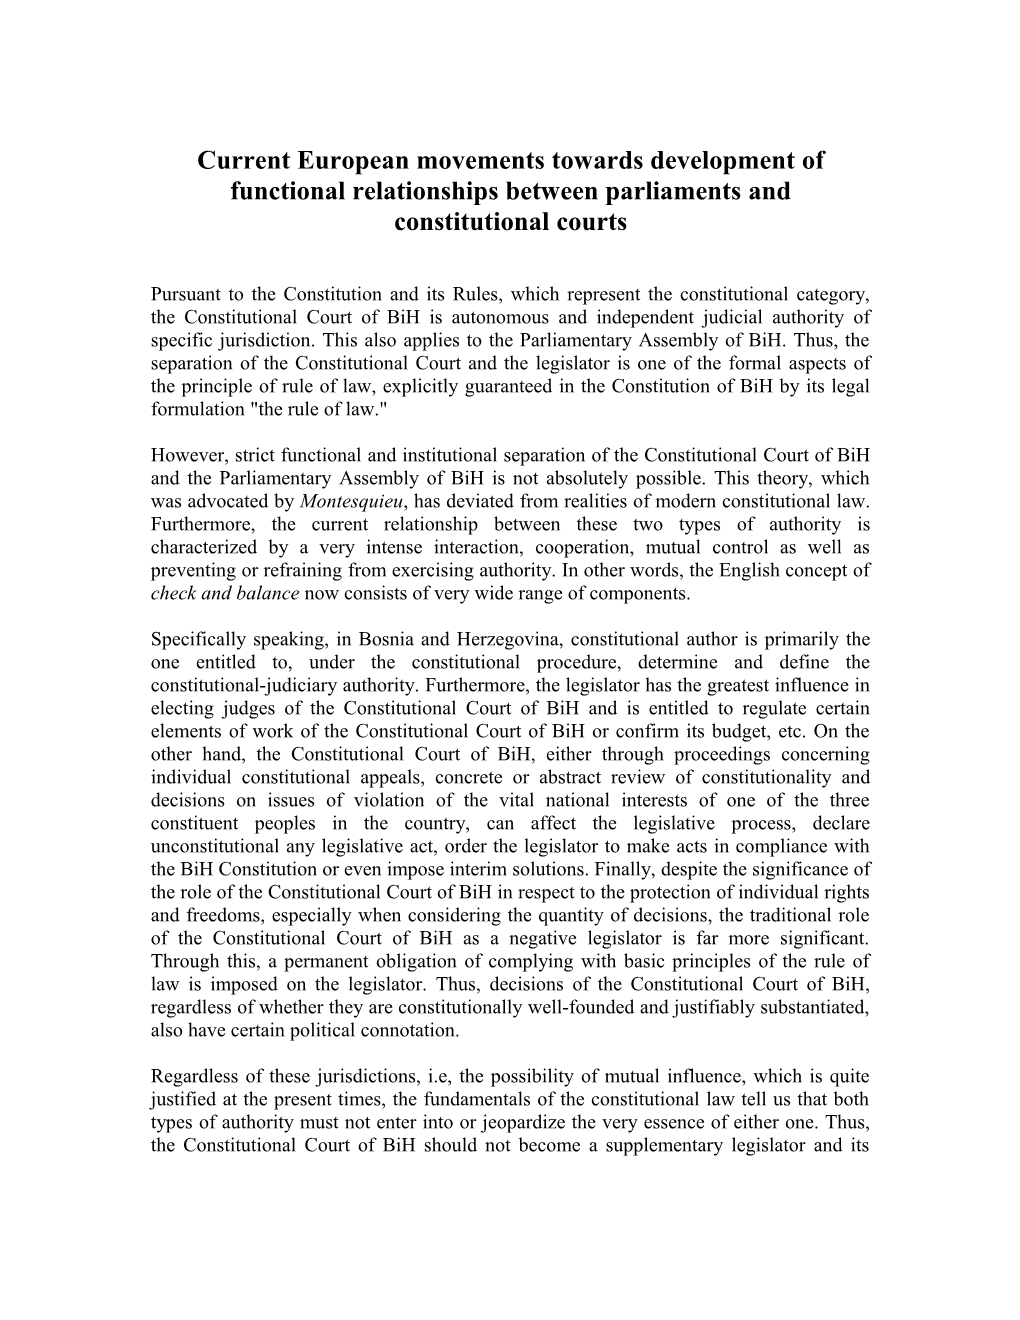 Current European Trends Towards the Development of Functional Relationships Between Parliaments